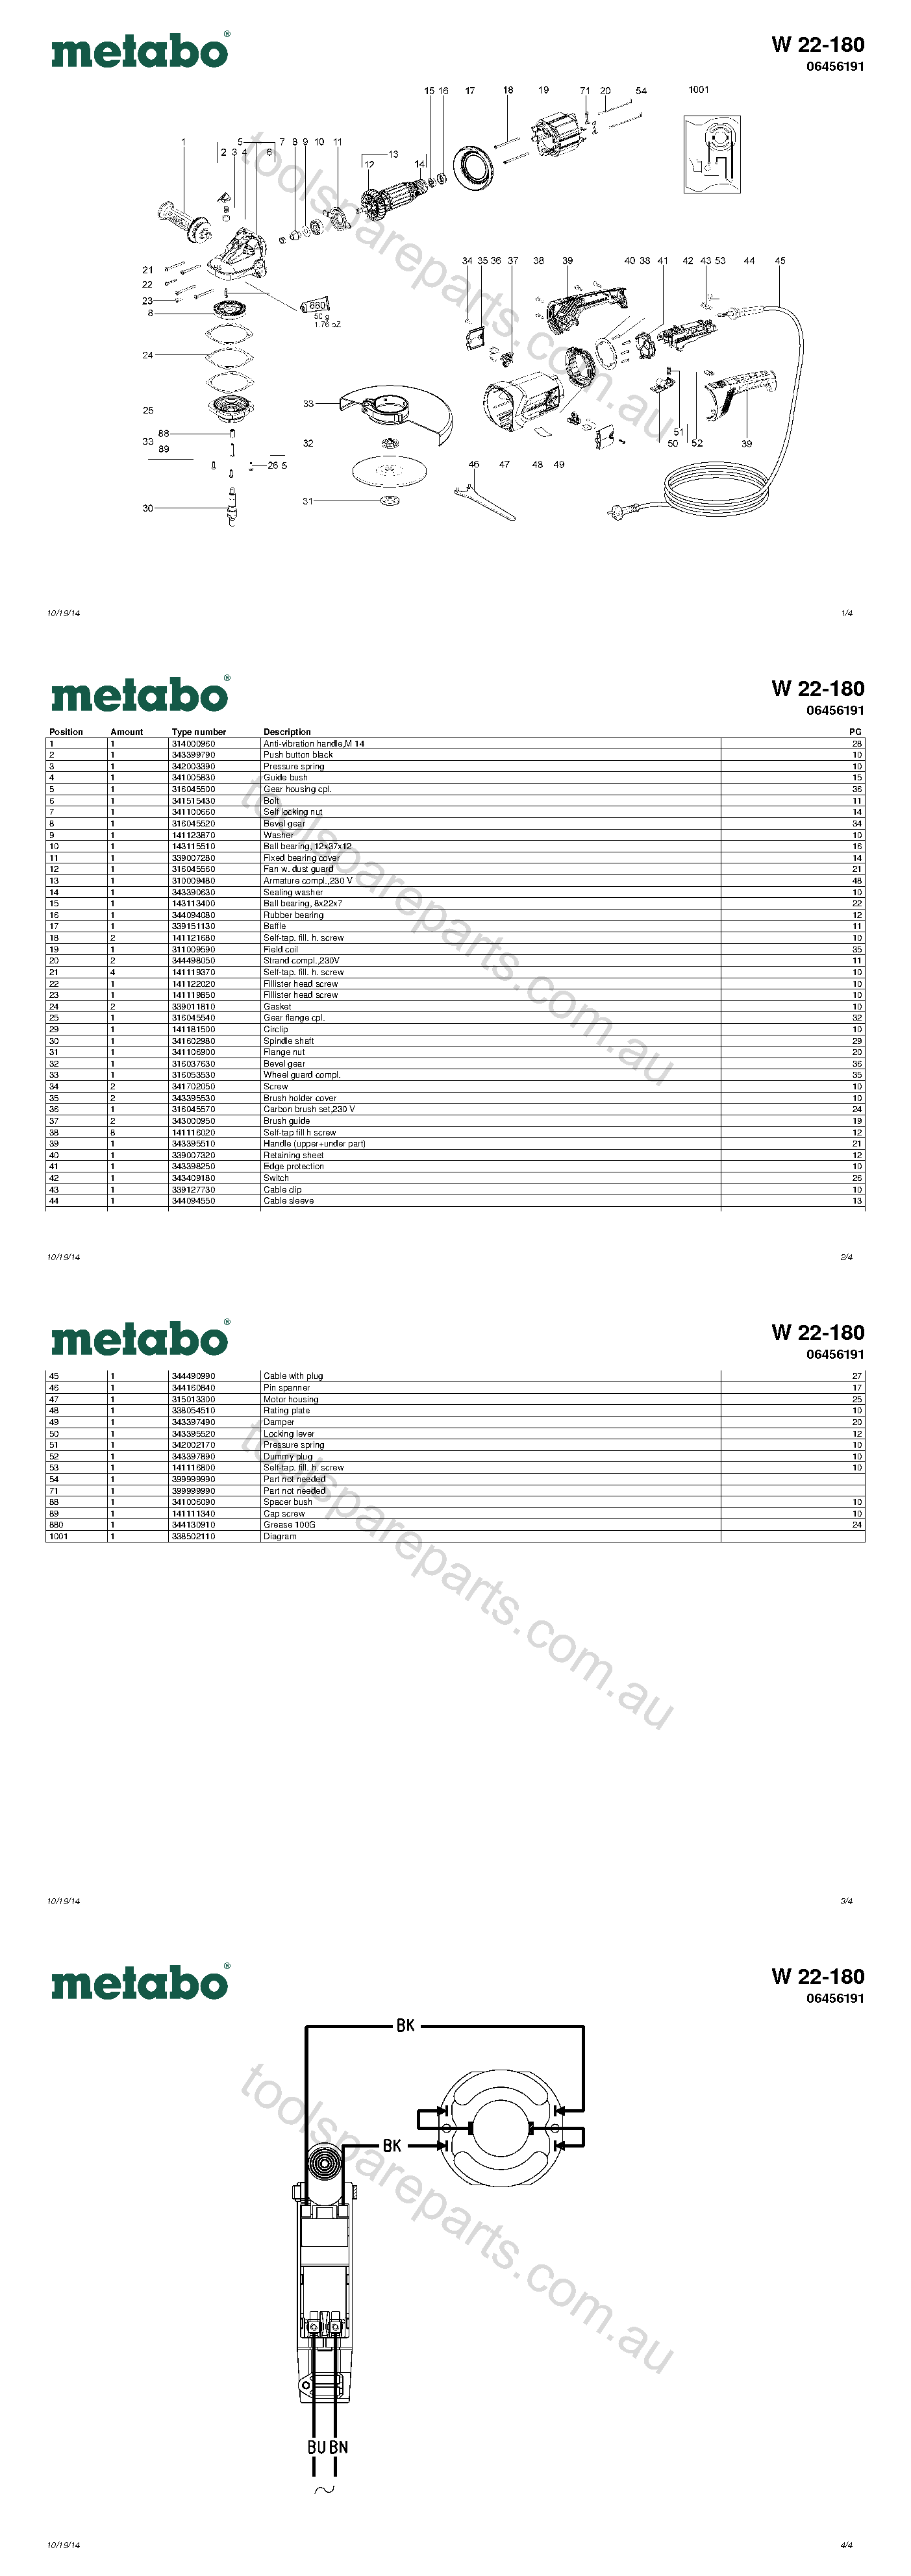 Metabo W 22-180 06456191  Diagram 1